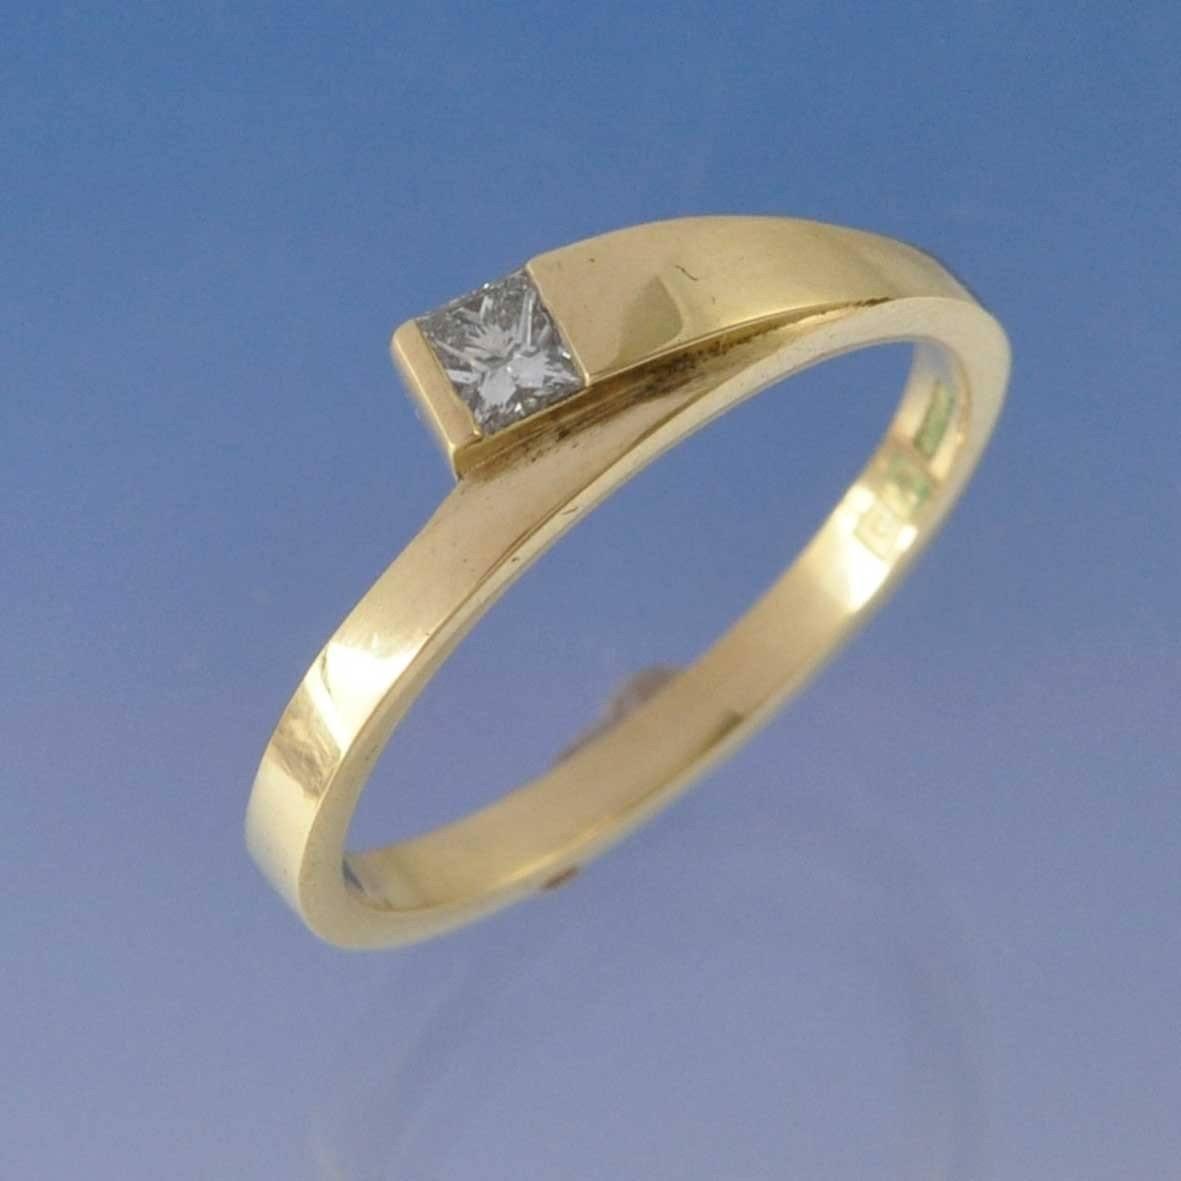 Lapover Diamond Ring Ring by Chris Parry Jewellery